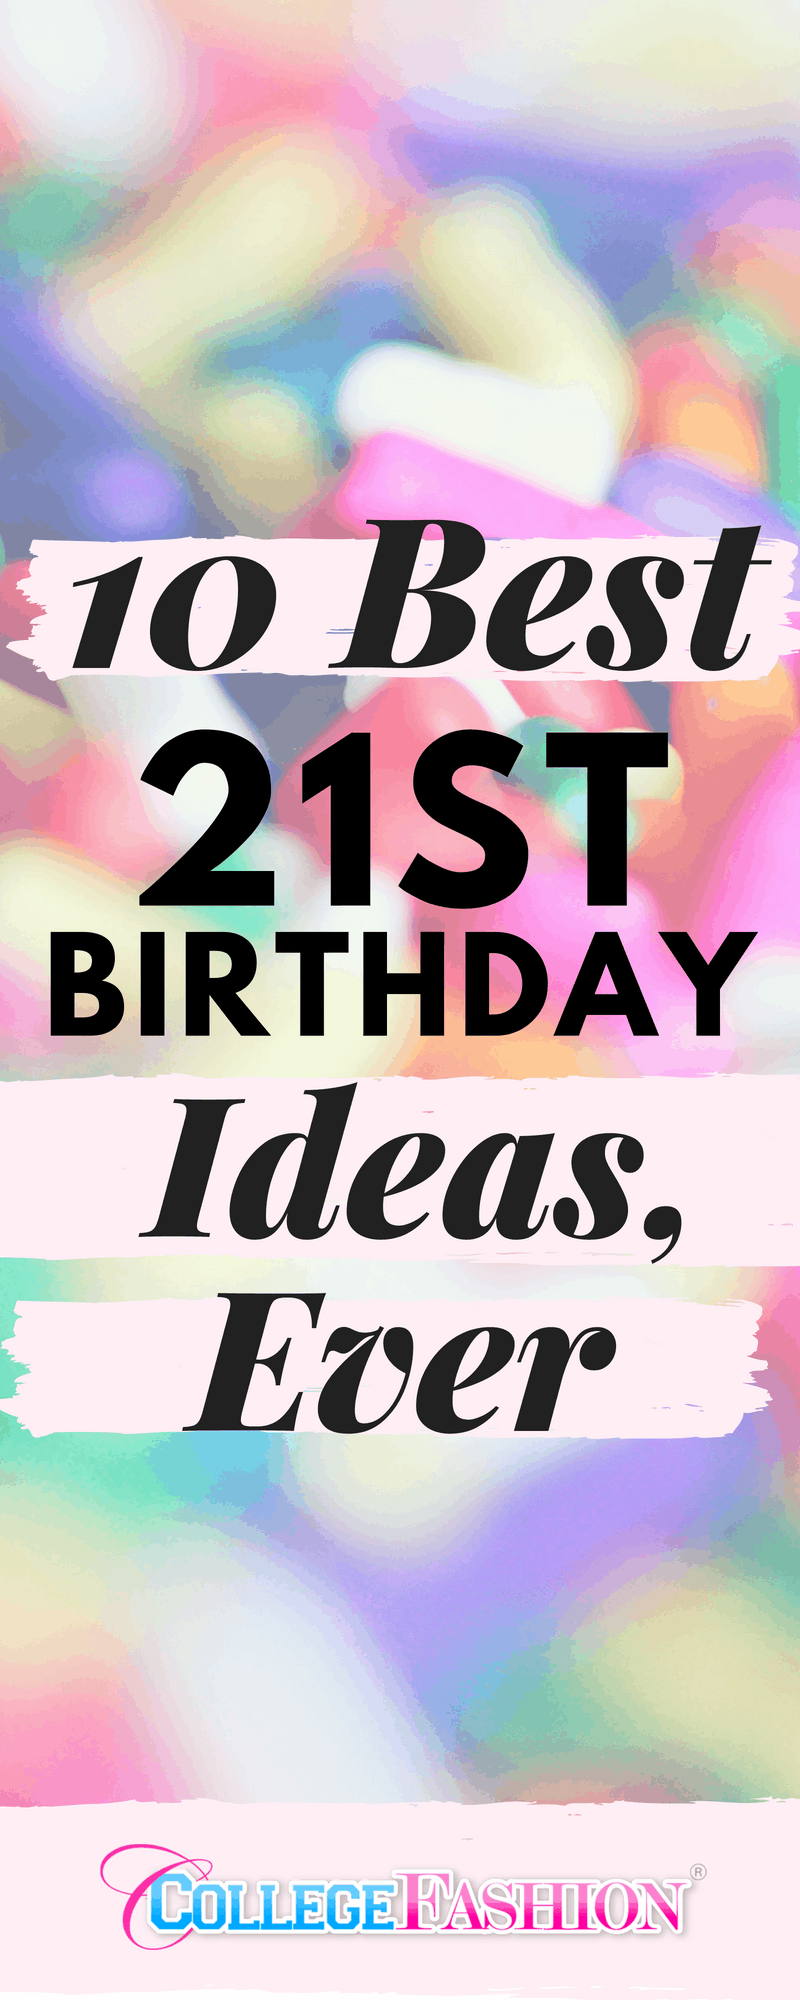 21st birthday ideas